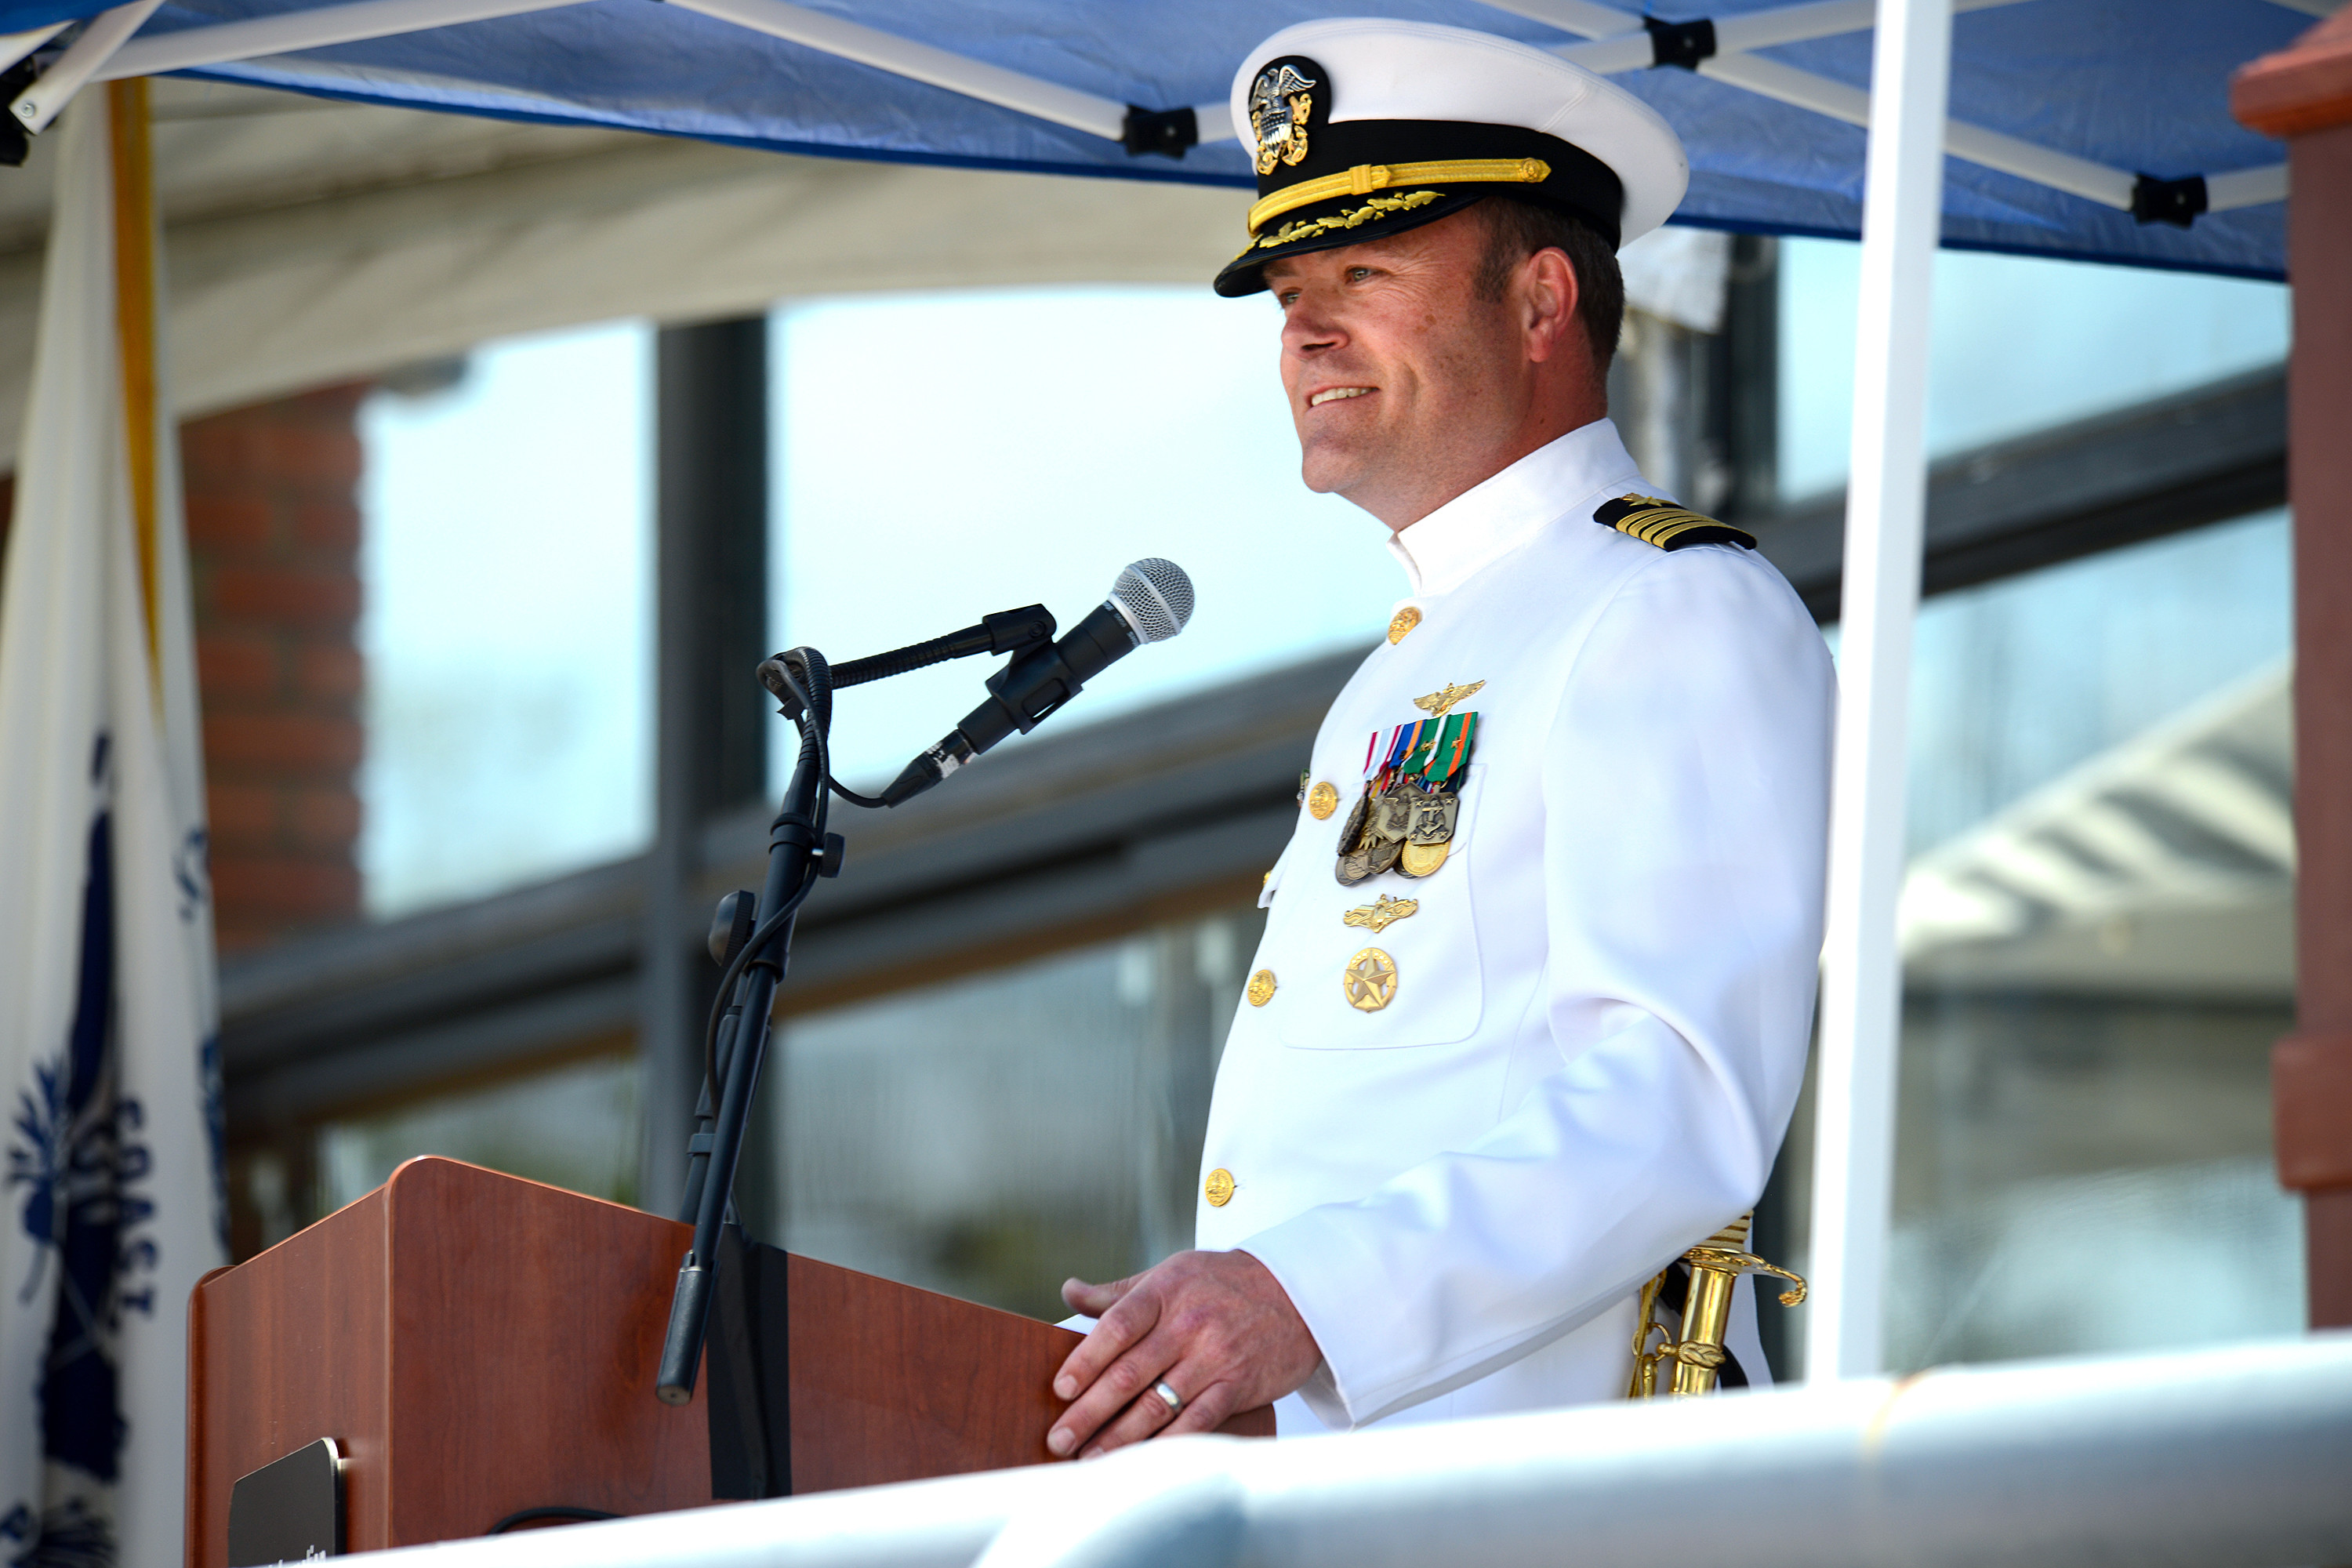 Captain McKenna speaking at a podium microphone